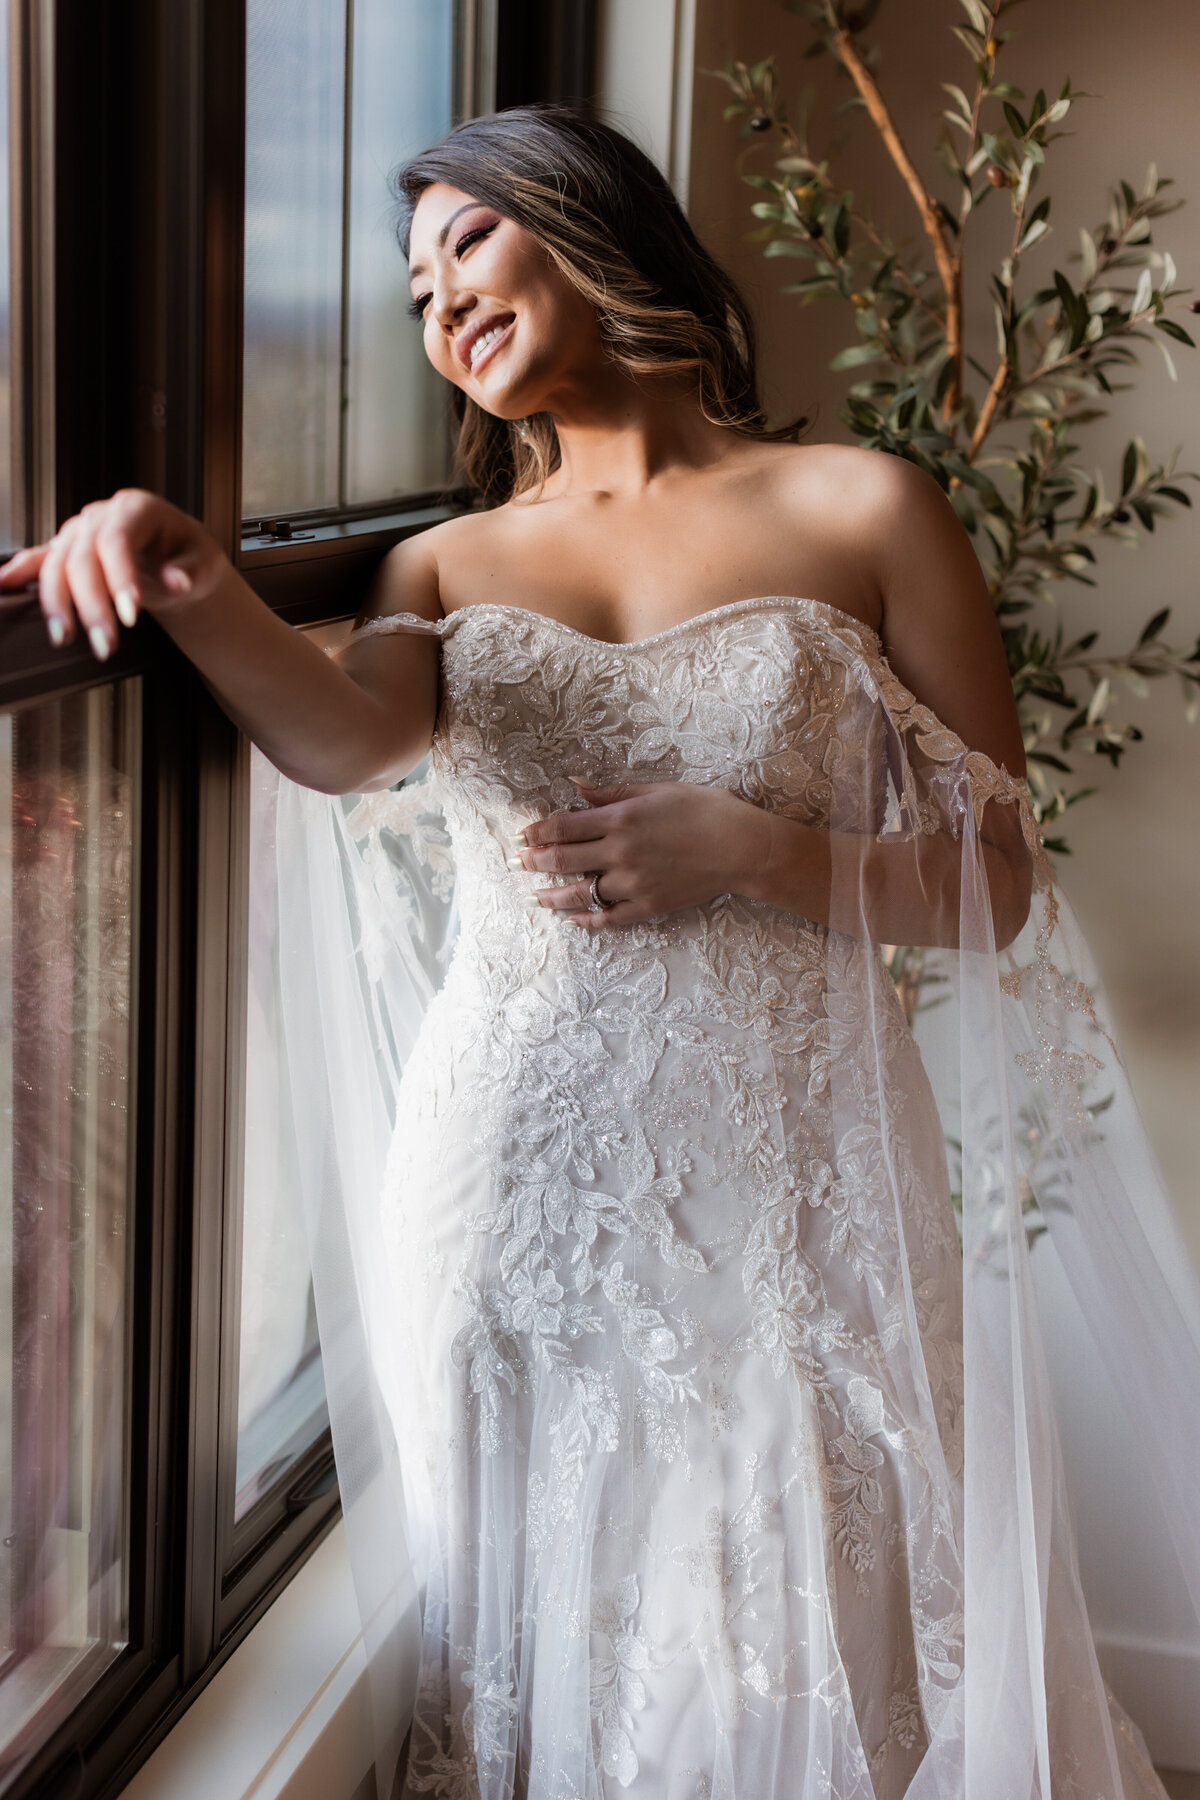 Asian bride smiling standing beside window.